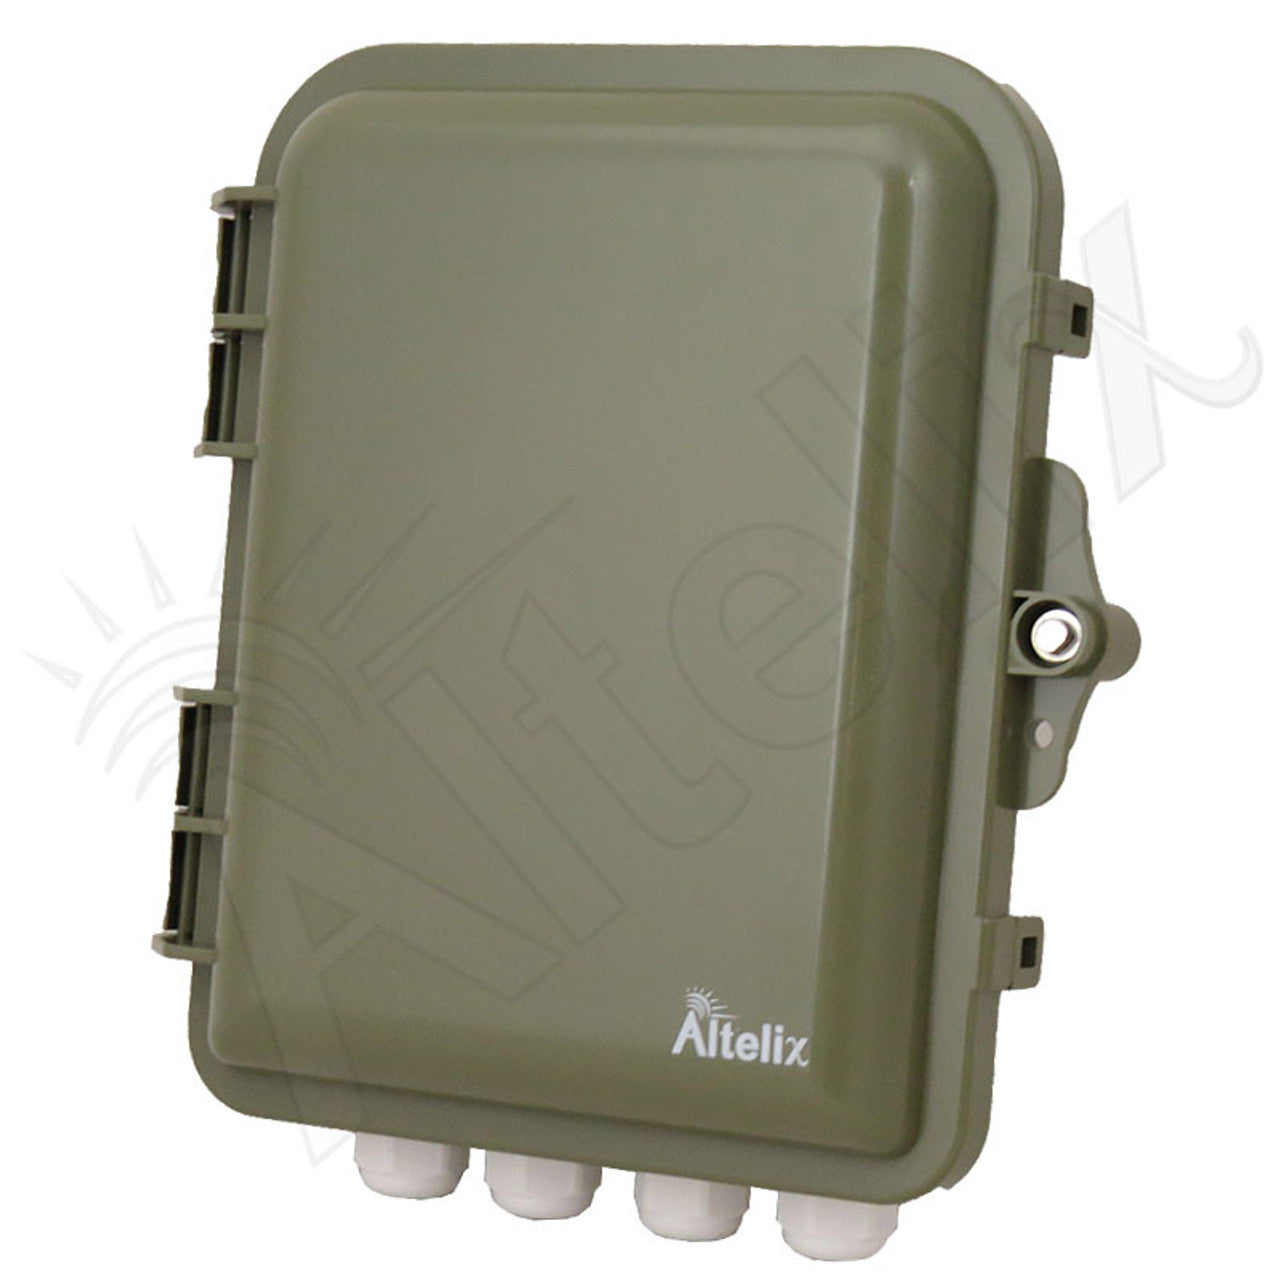 Altelix 9x8x3 IP66 NEMA 4X PC+ABS Weatherproof Utility Box with Hinged Door and Aluminum Mounting Plate